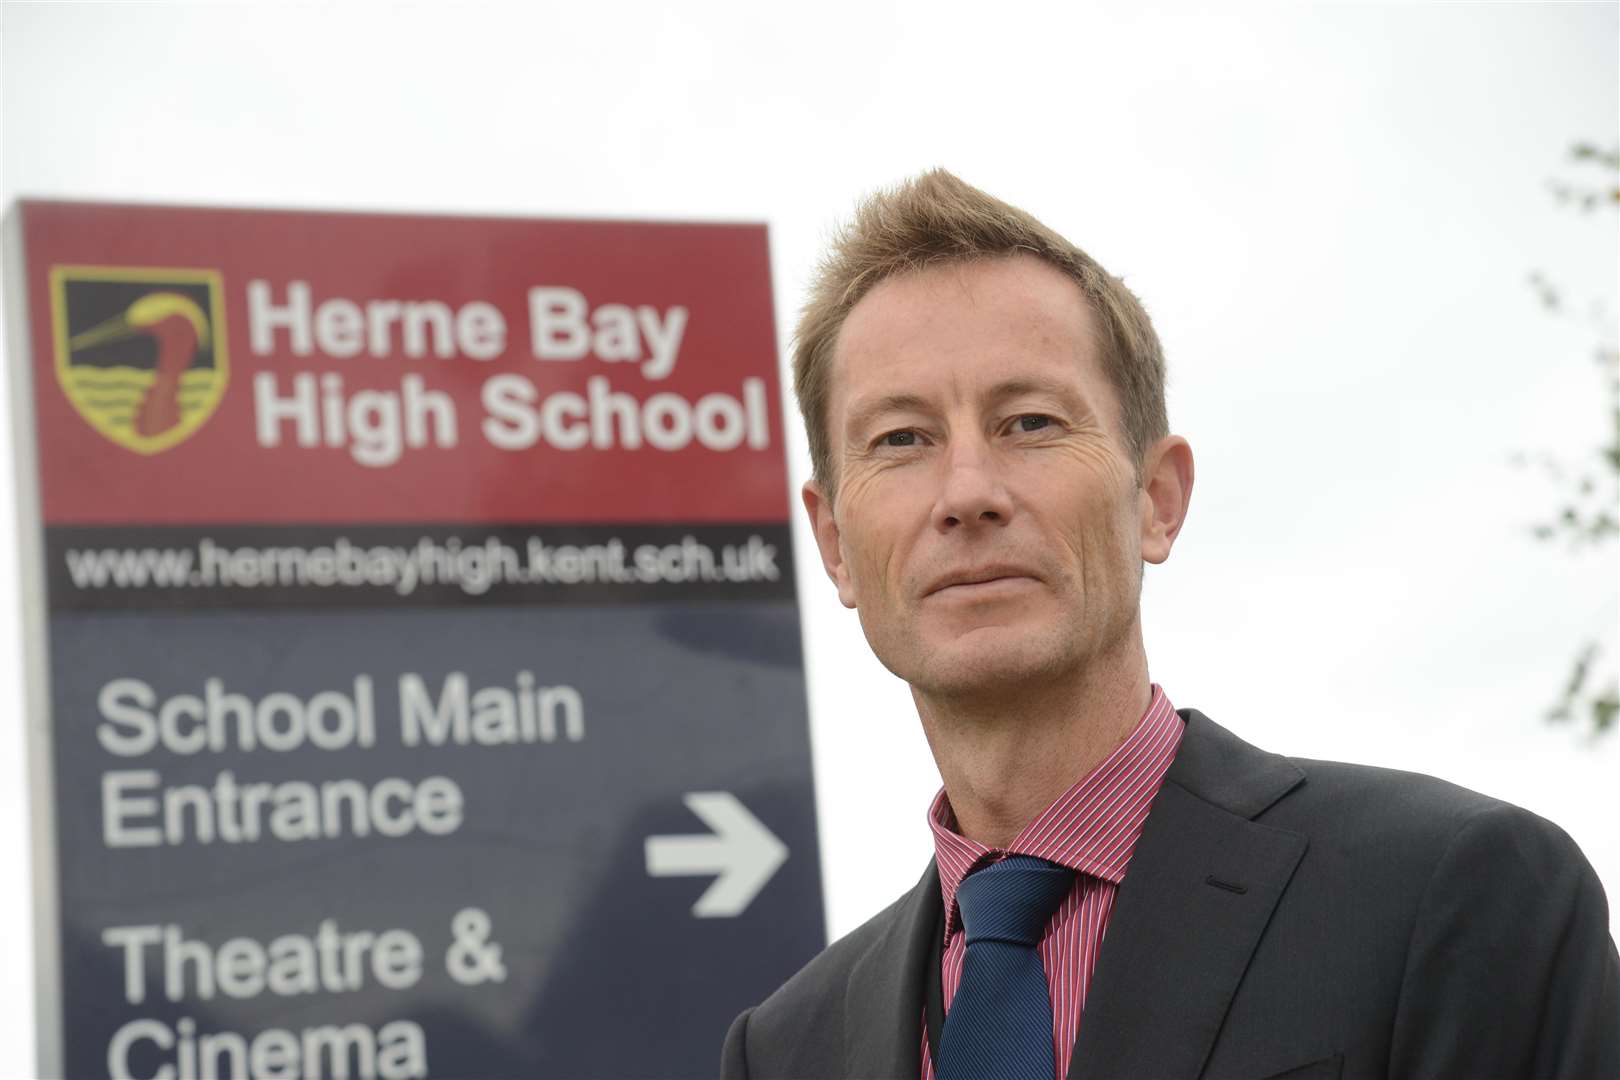 Jon Boyes, Herne Bay High School's head teacher